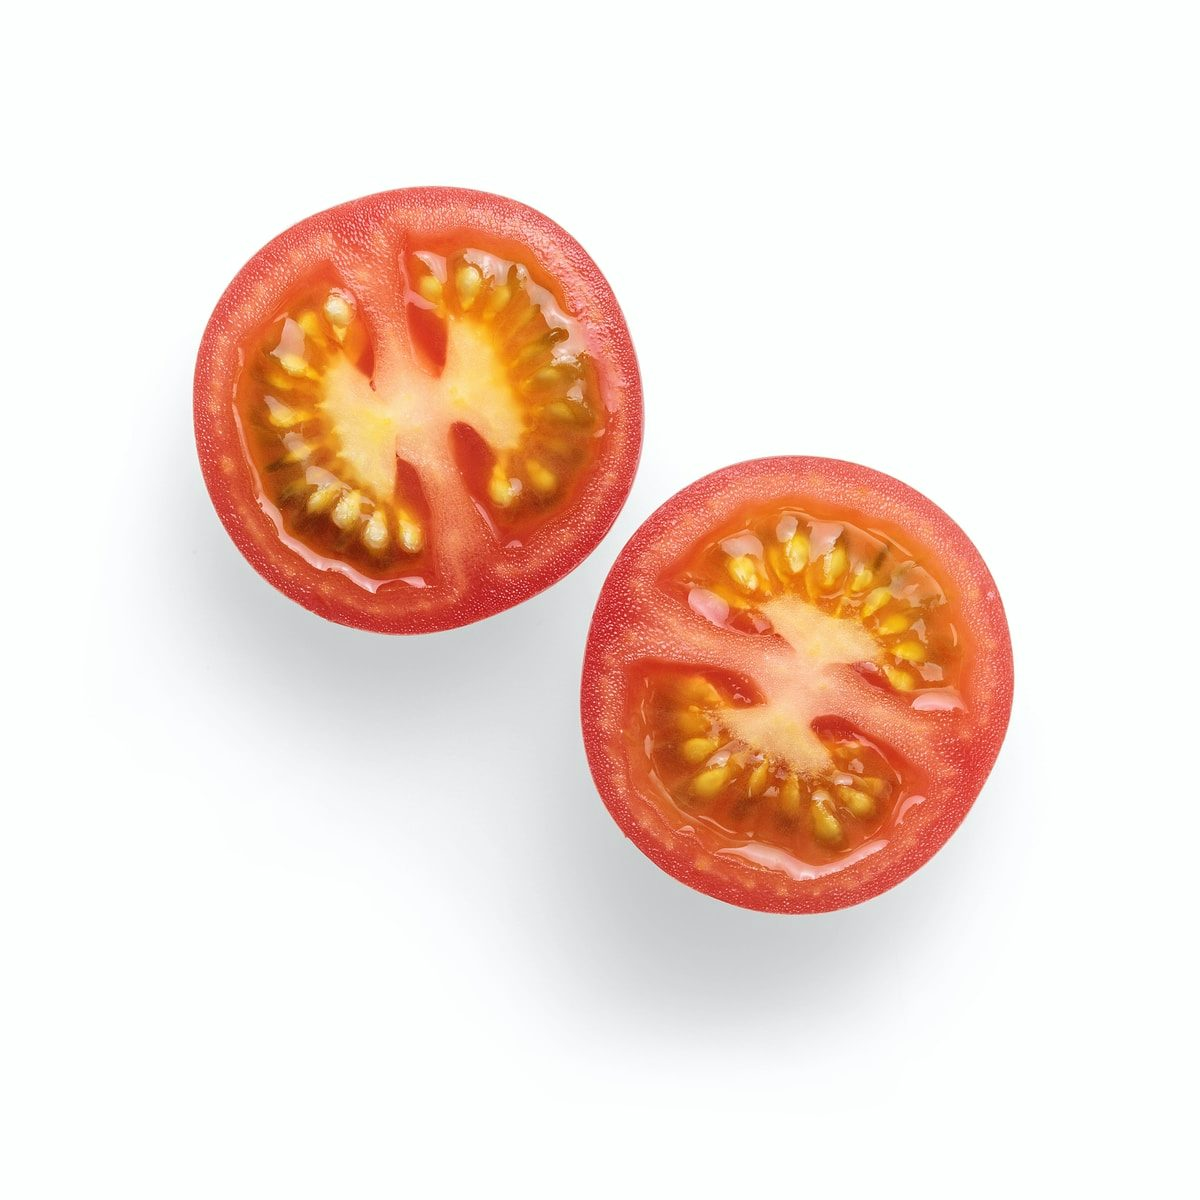 Tomato seeds extraction